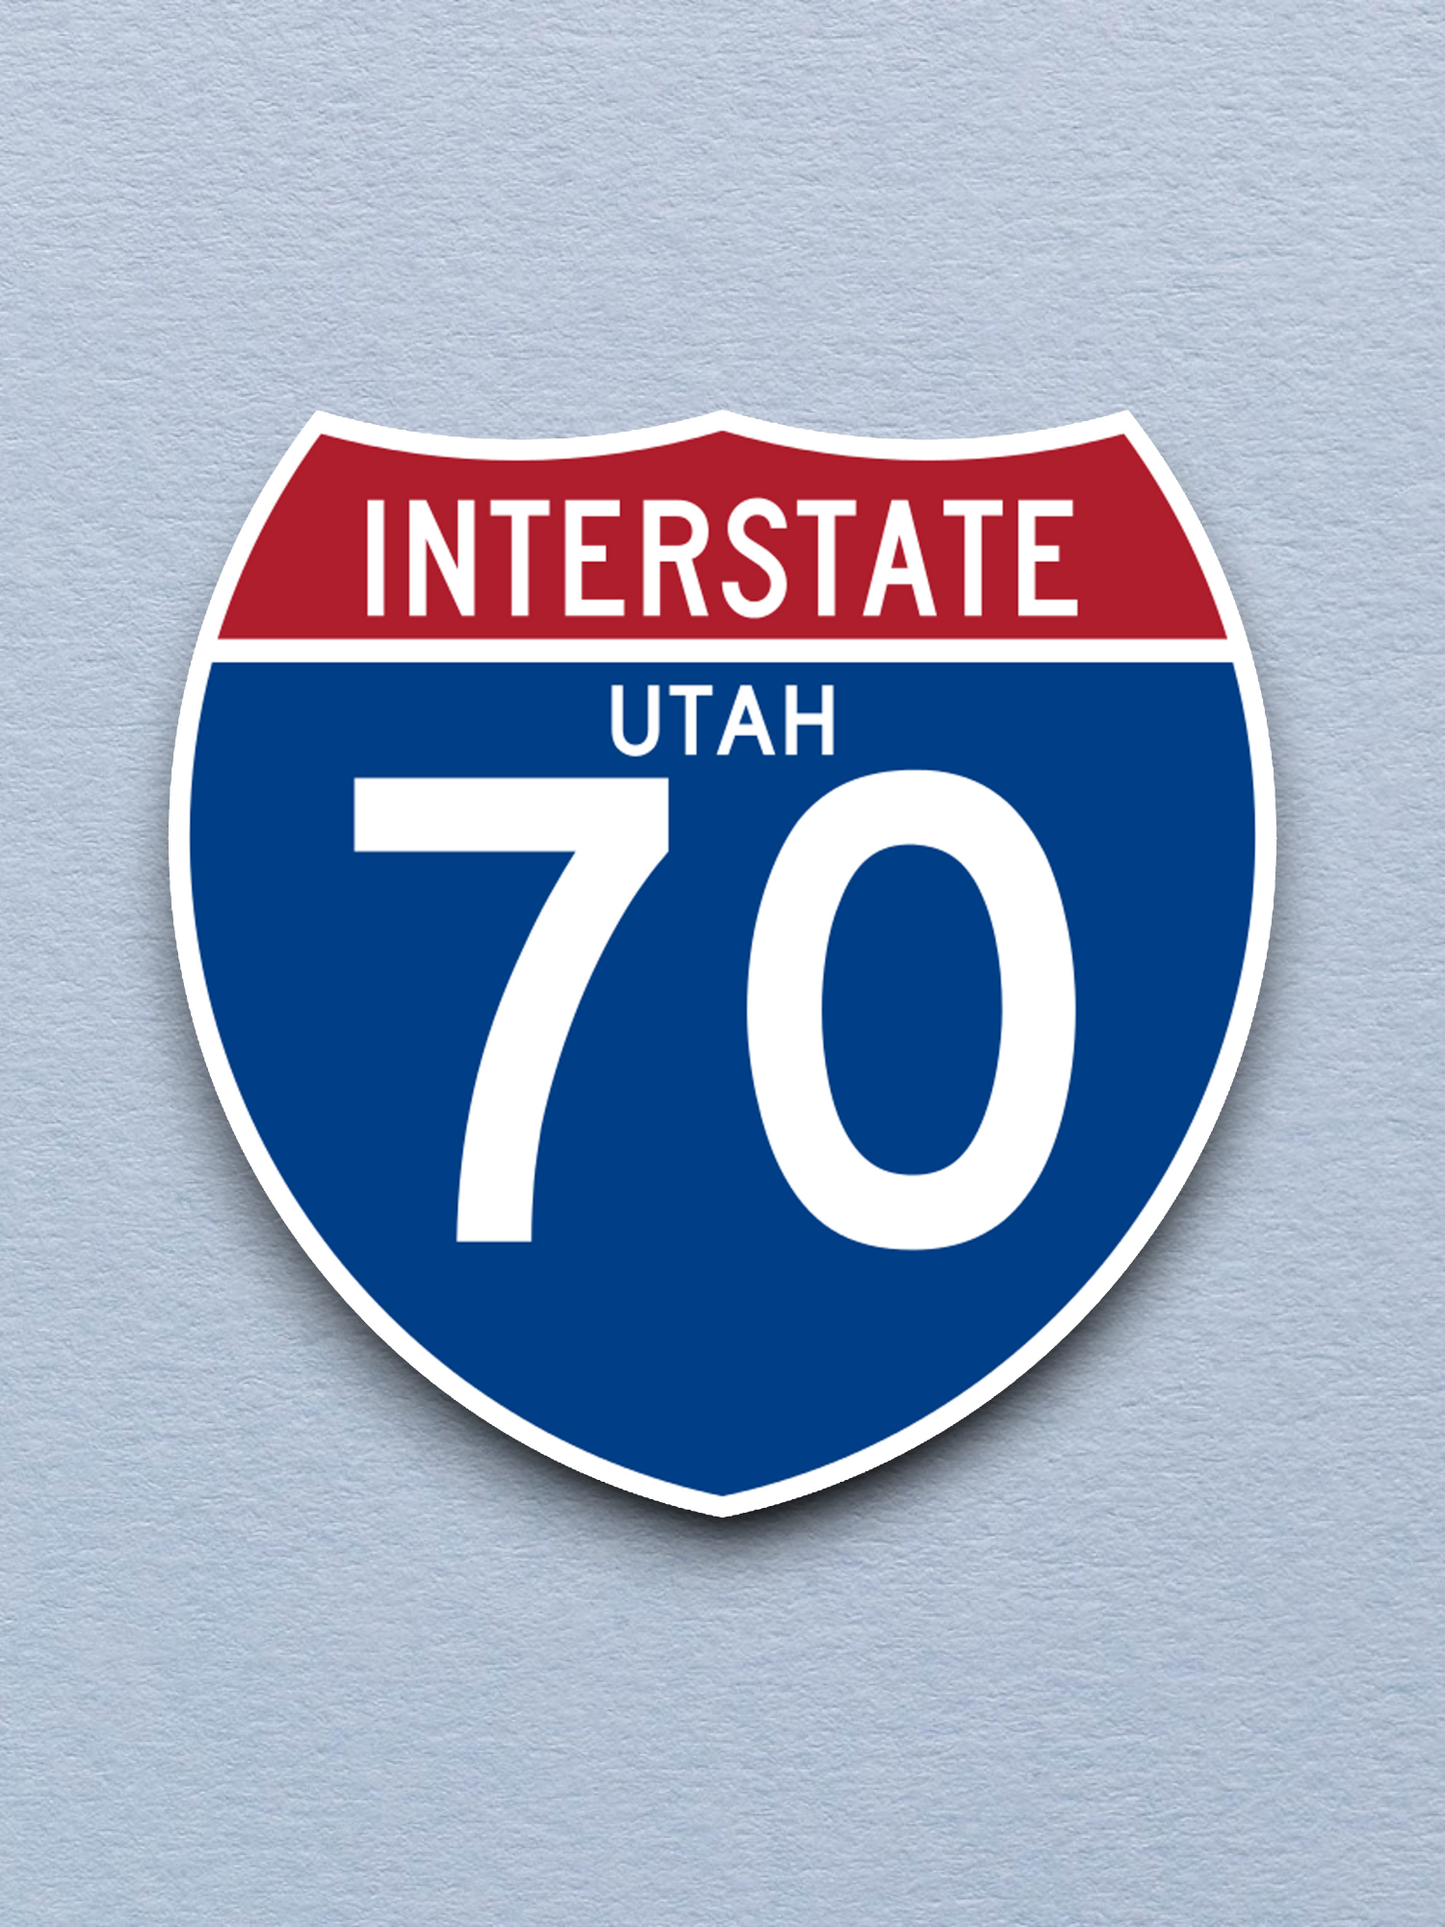 Interstate I-70 Utah - Road Sign Sticker